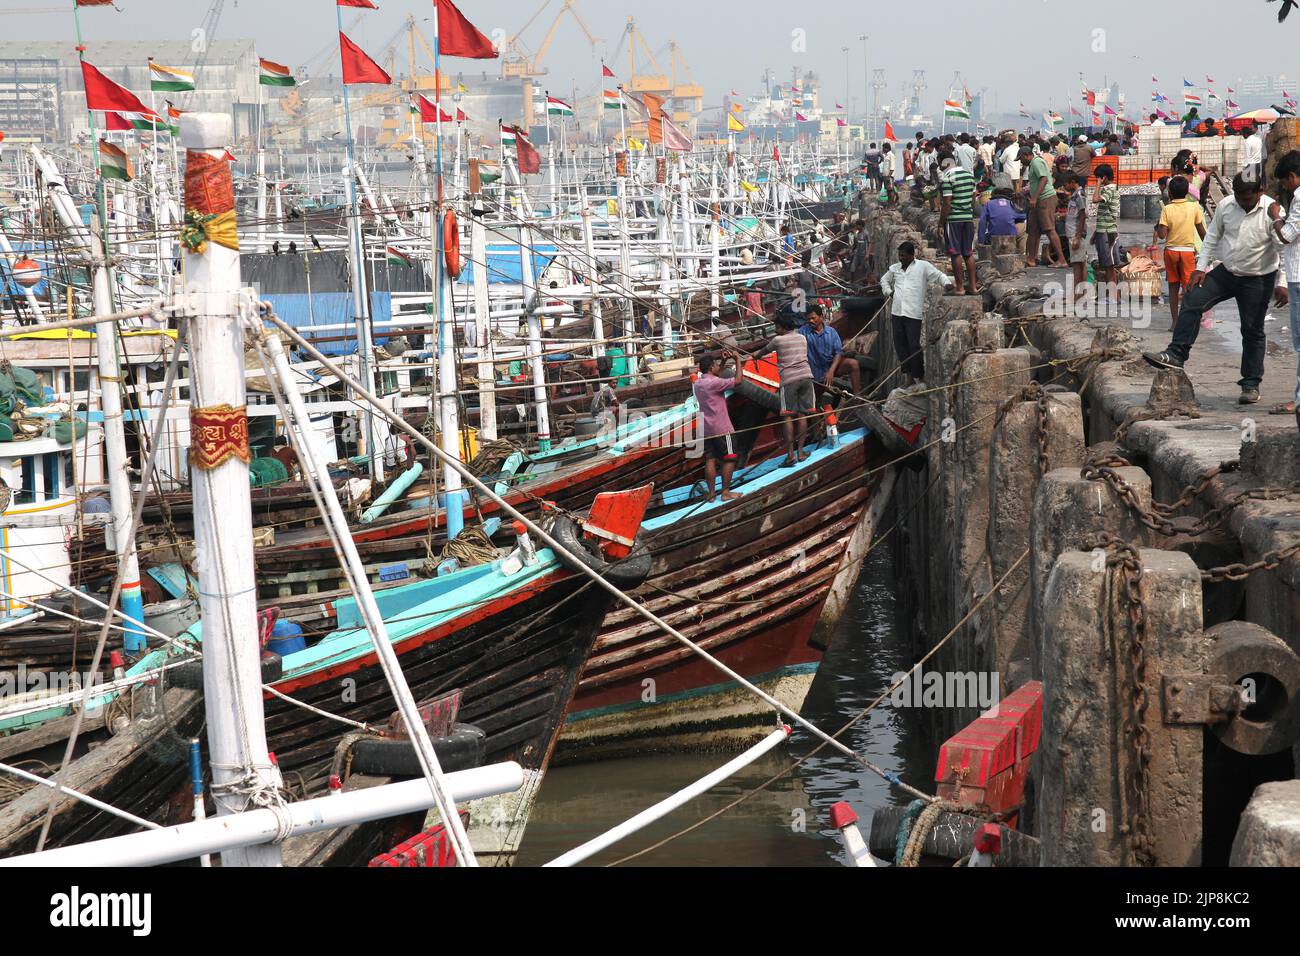 Fishing boats, Ferry Wharf, Bhaucha Dhakka, Mazgaon, Mumbai, India on February 2, 2013 Stock Photo